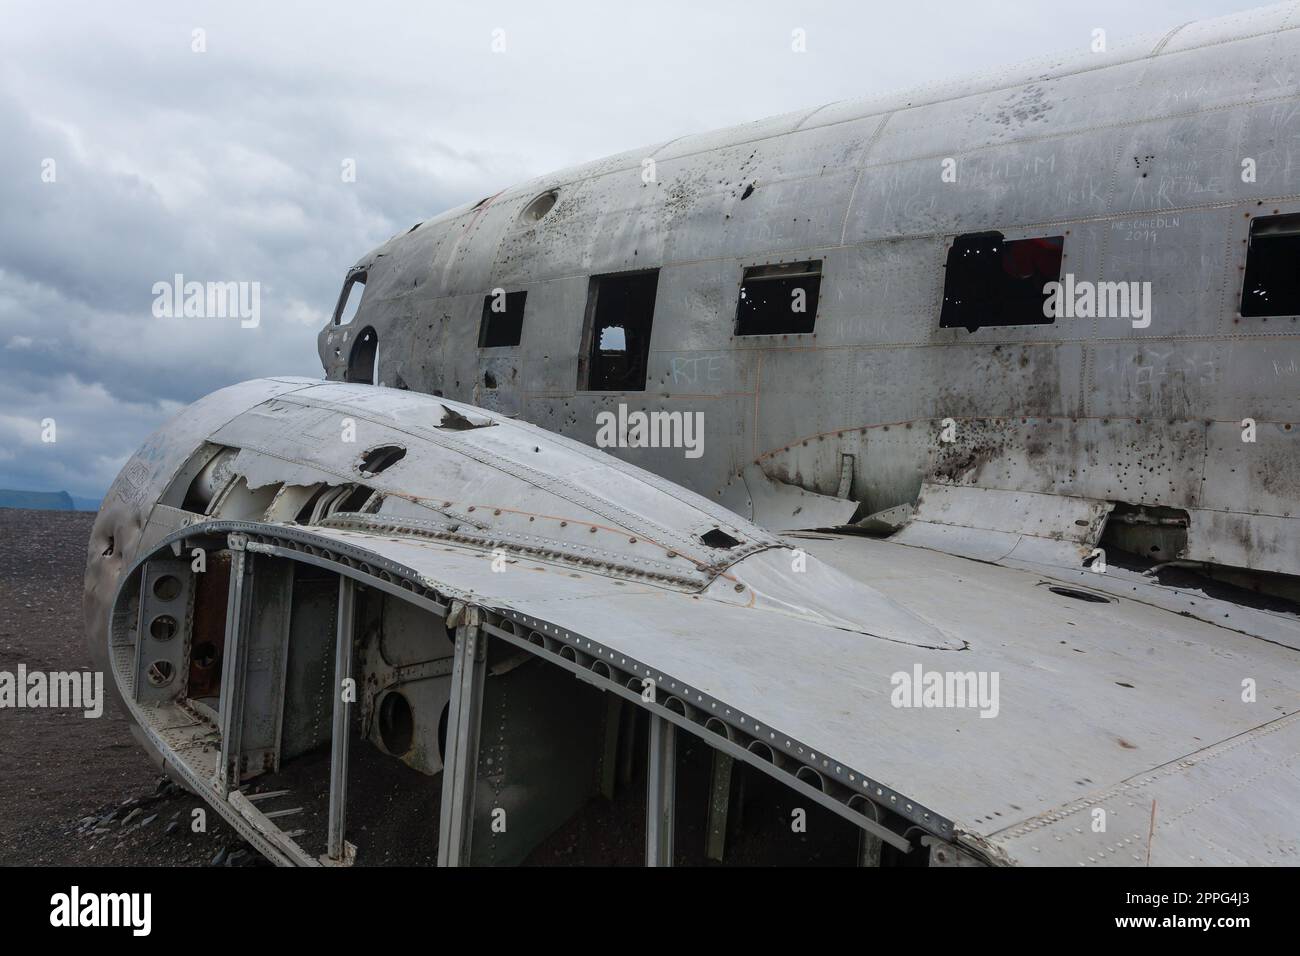 Solheimasandur plane wreck view. South Iceland landmark Stock Photo